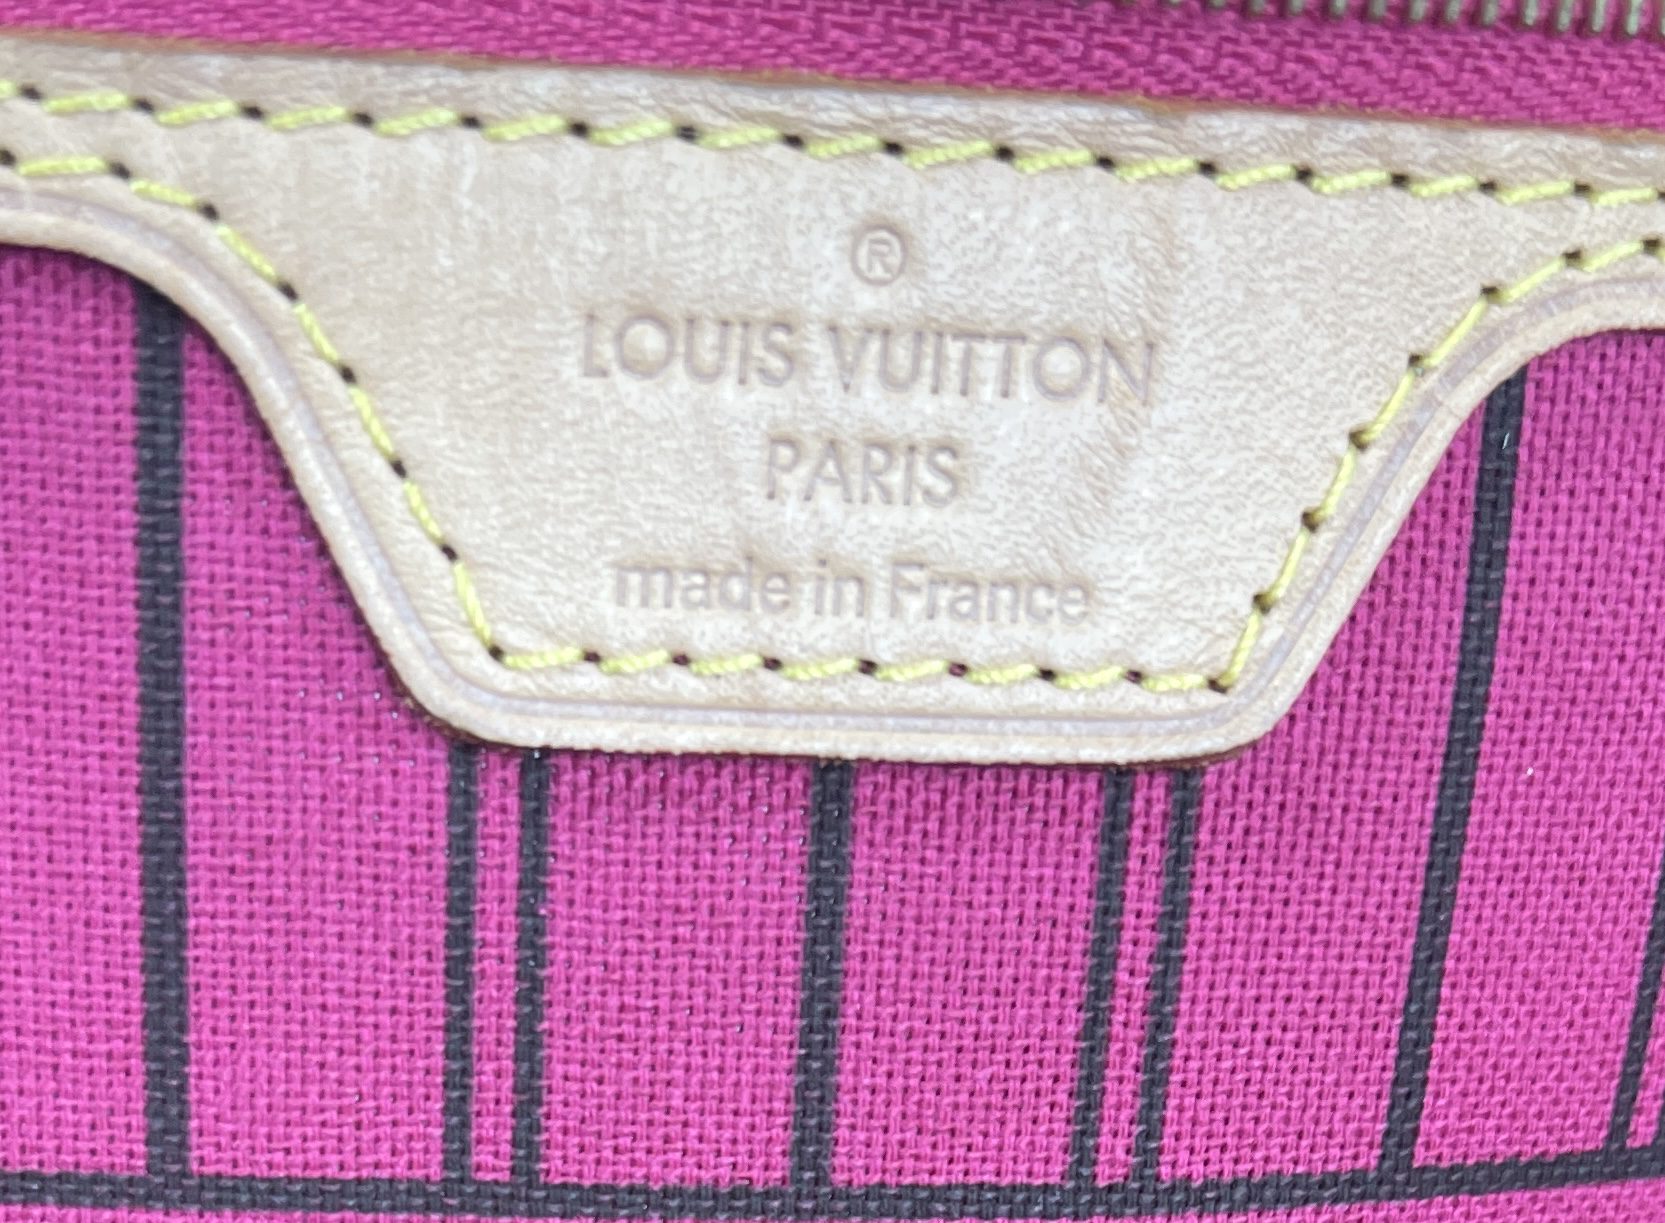 Louis Vuitton Neverfull Authentic